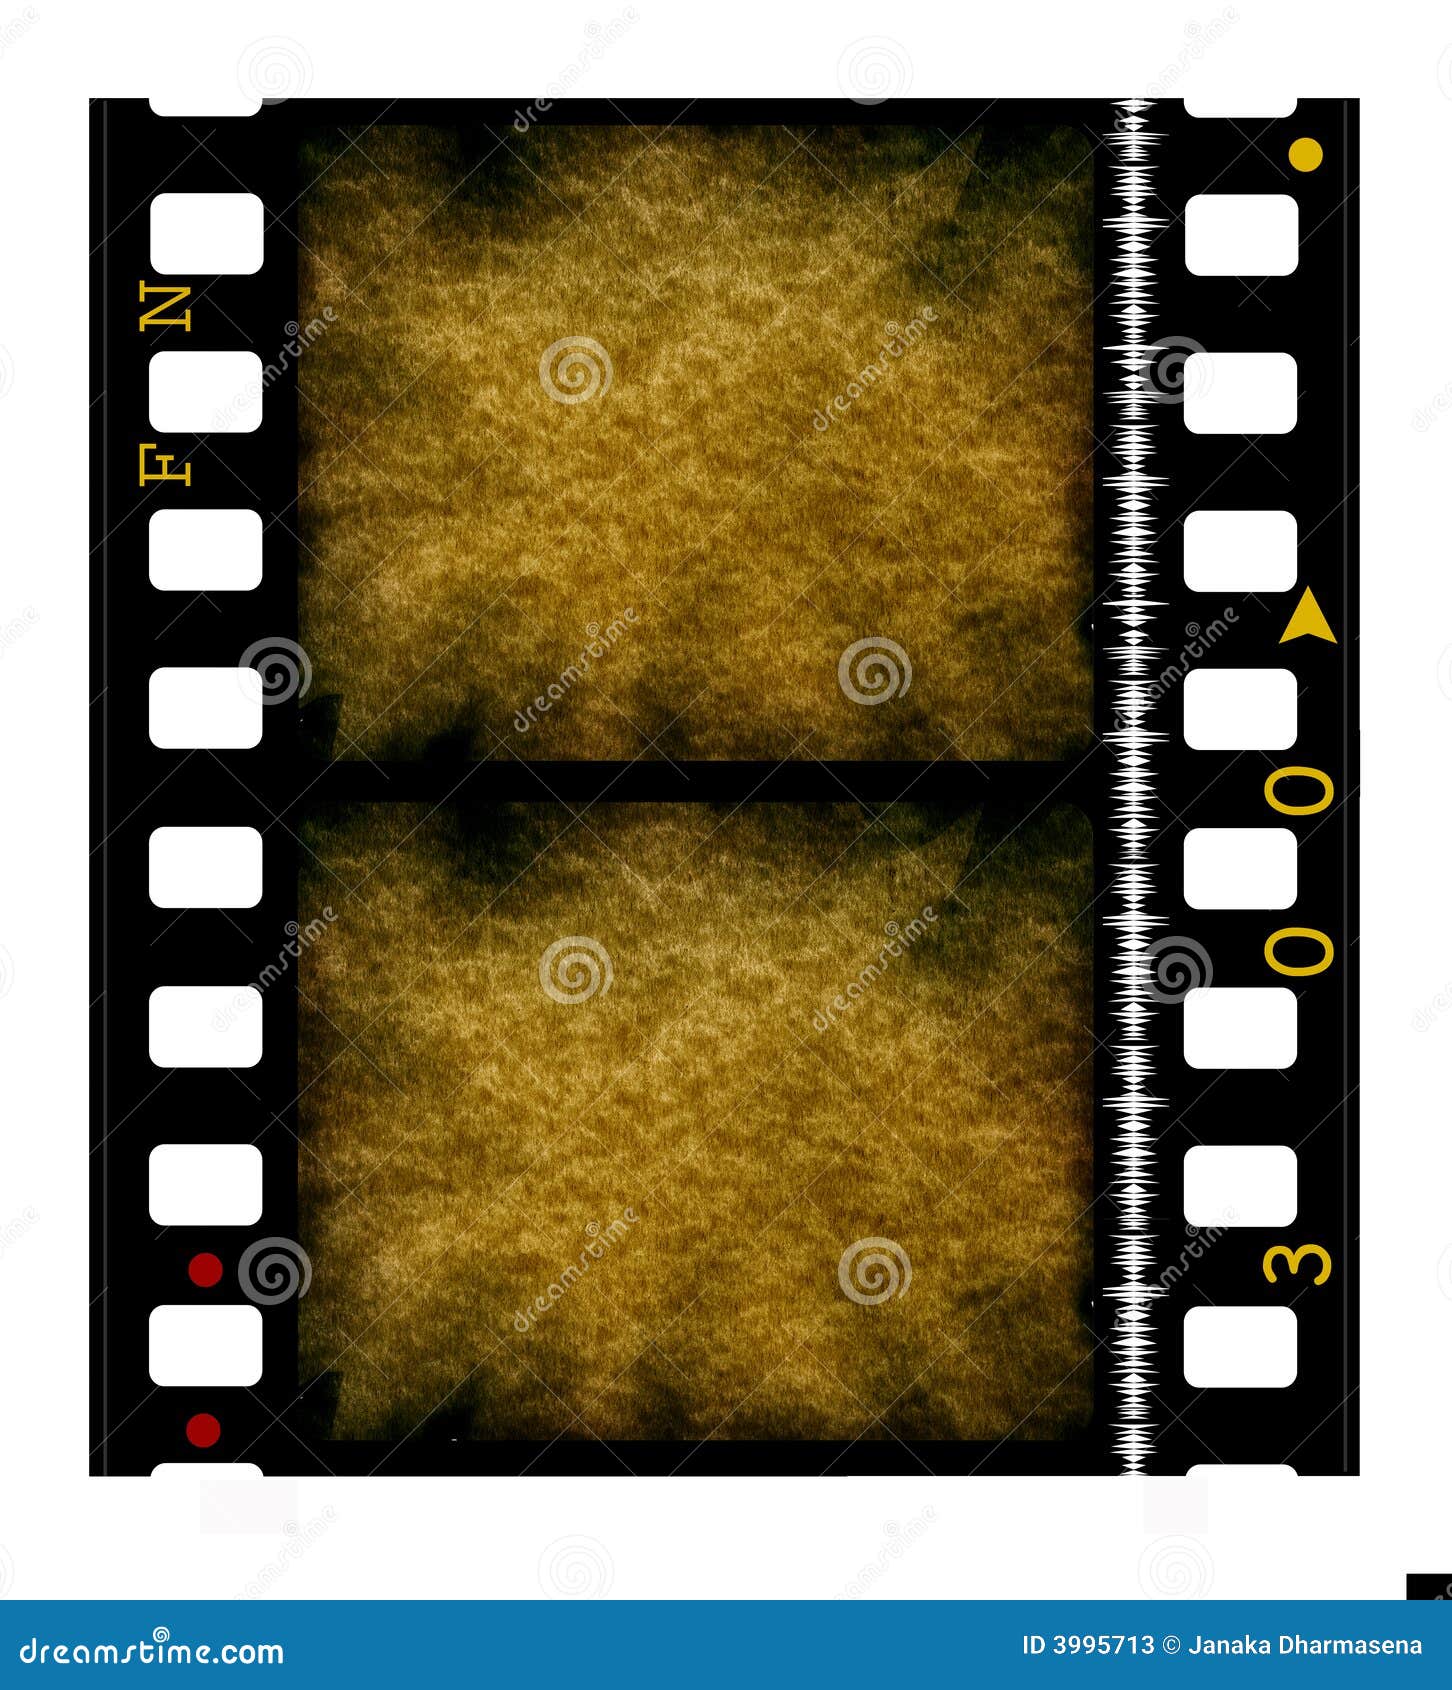 35 Mm Movie Film Reel Illustrations & Vectors